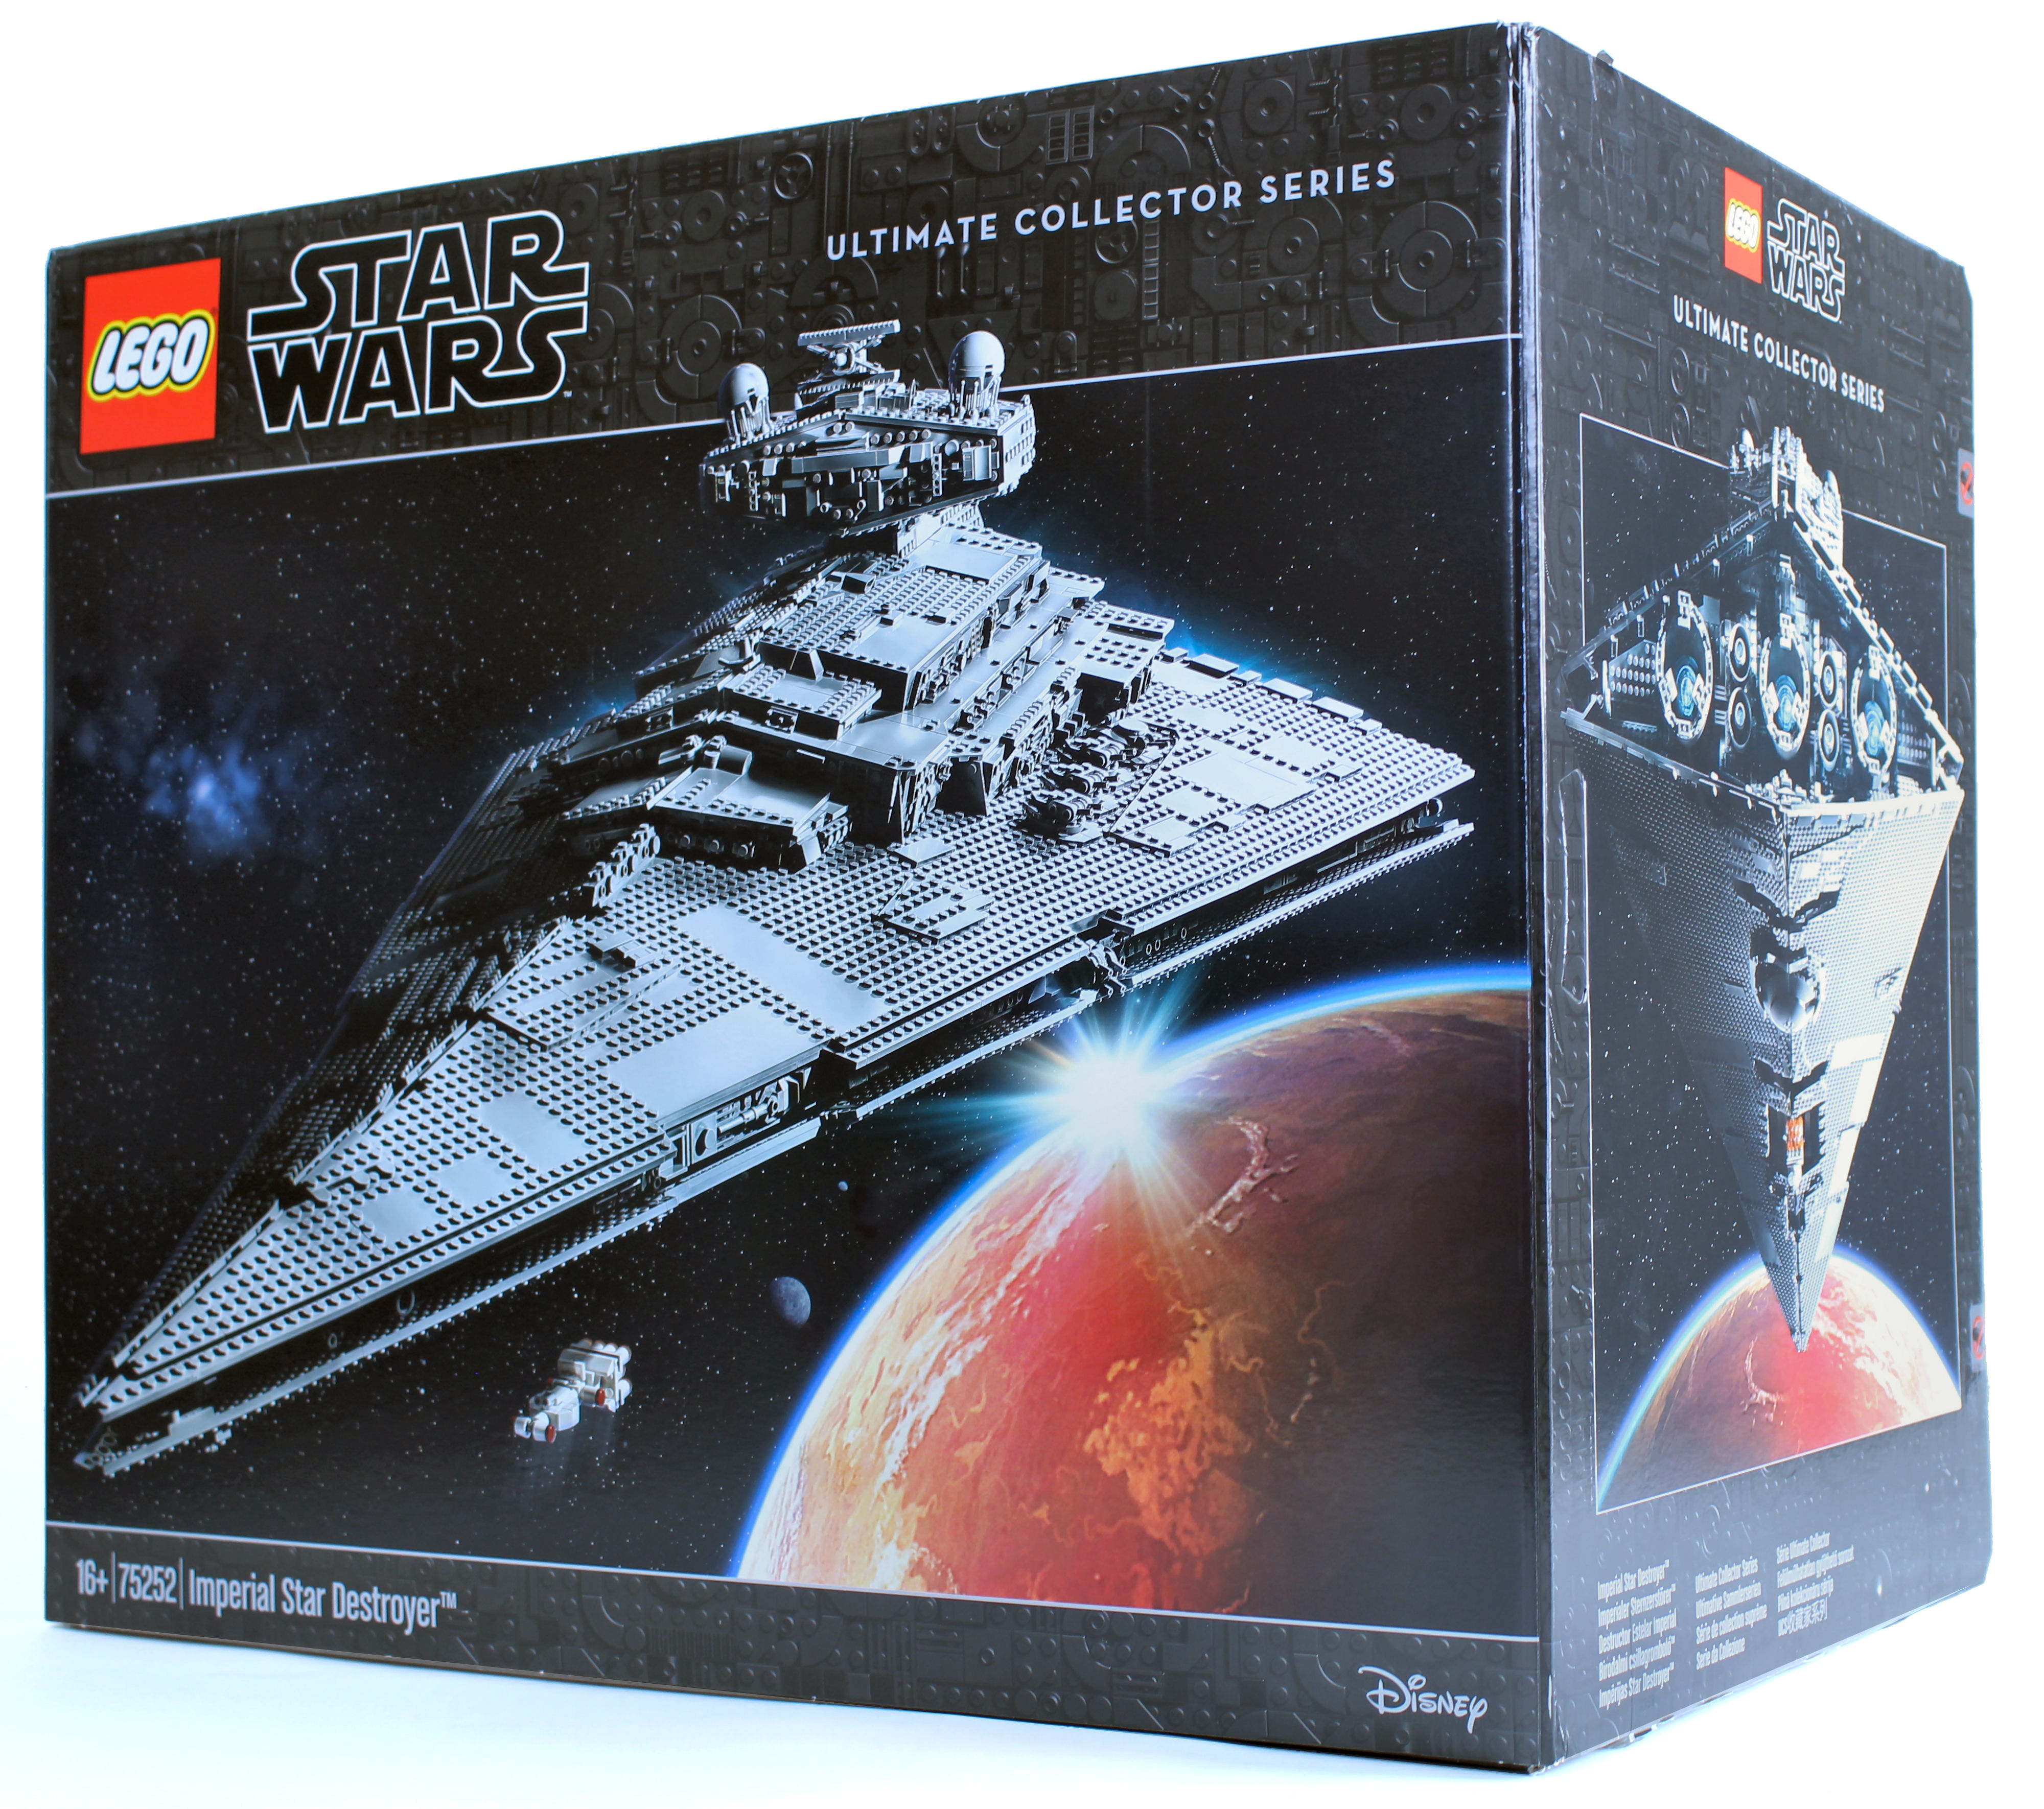 lego star wars imperial star destroyer 2019